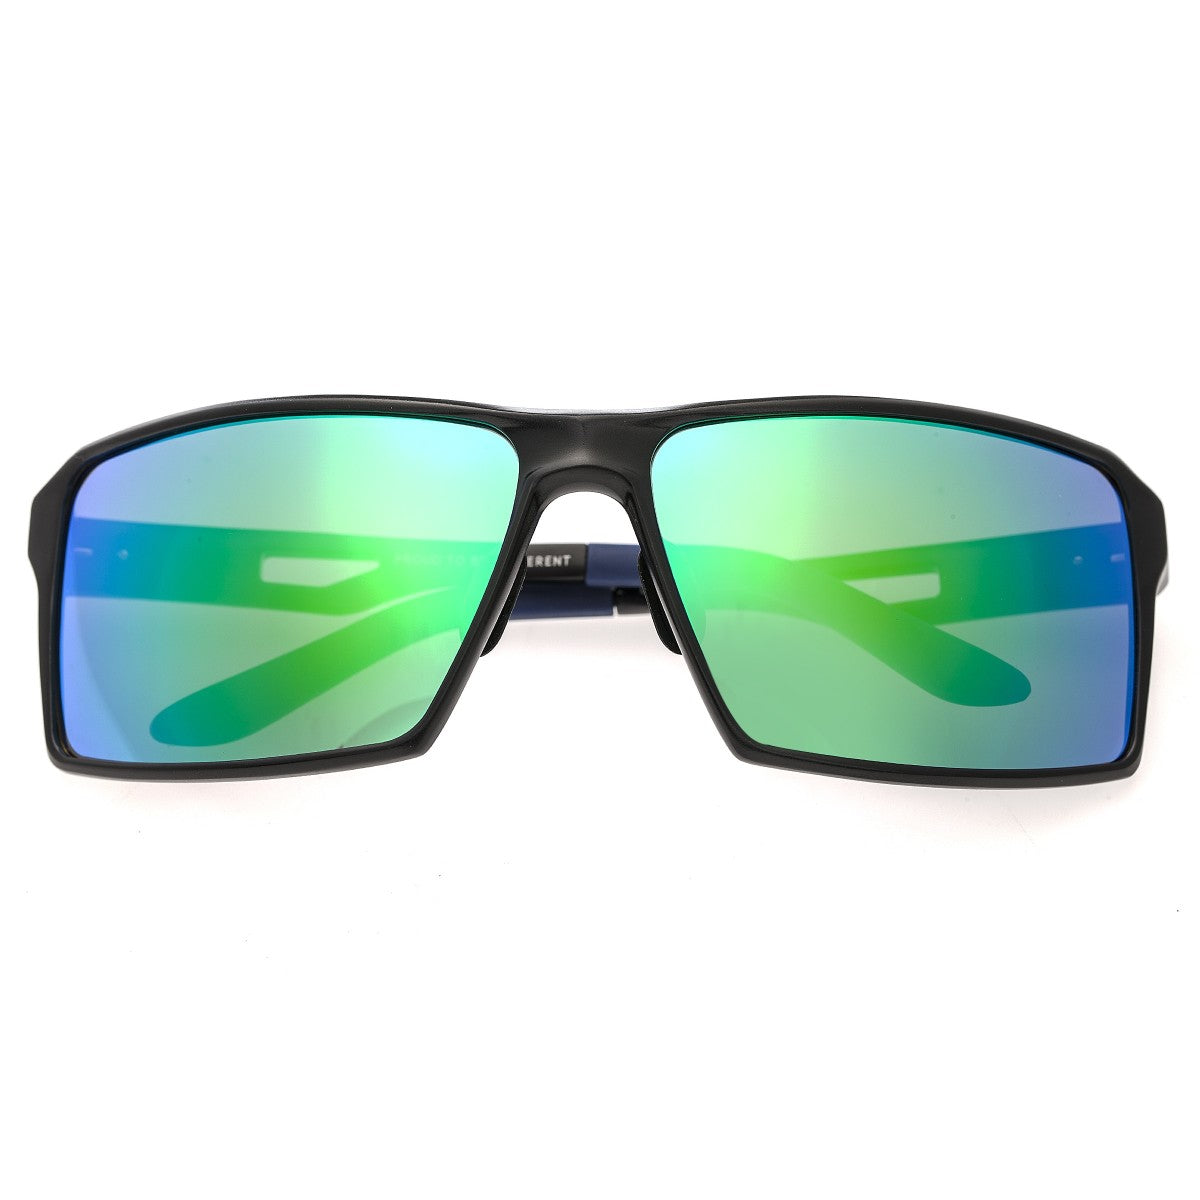 Alpina Finety Polarized Mirrored Sunglasses  Mirrored sunglasses,  Sunglasses, Sunglasses shop